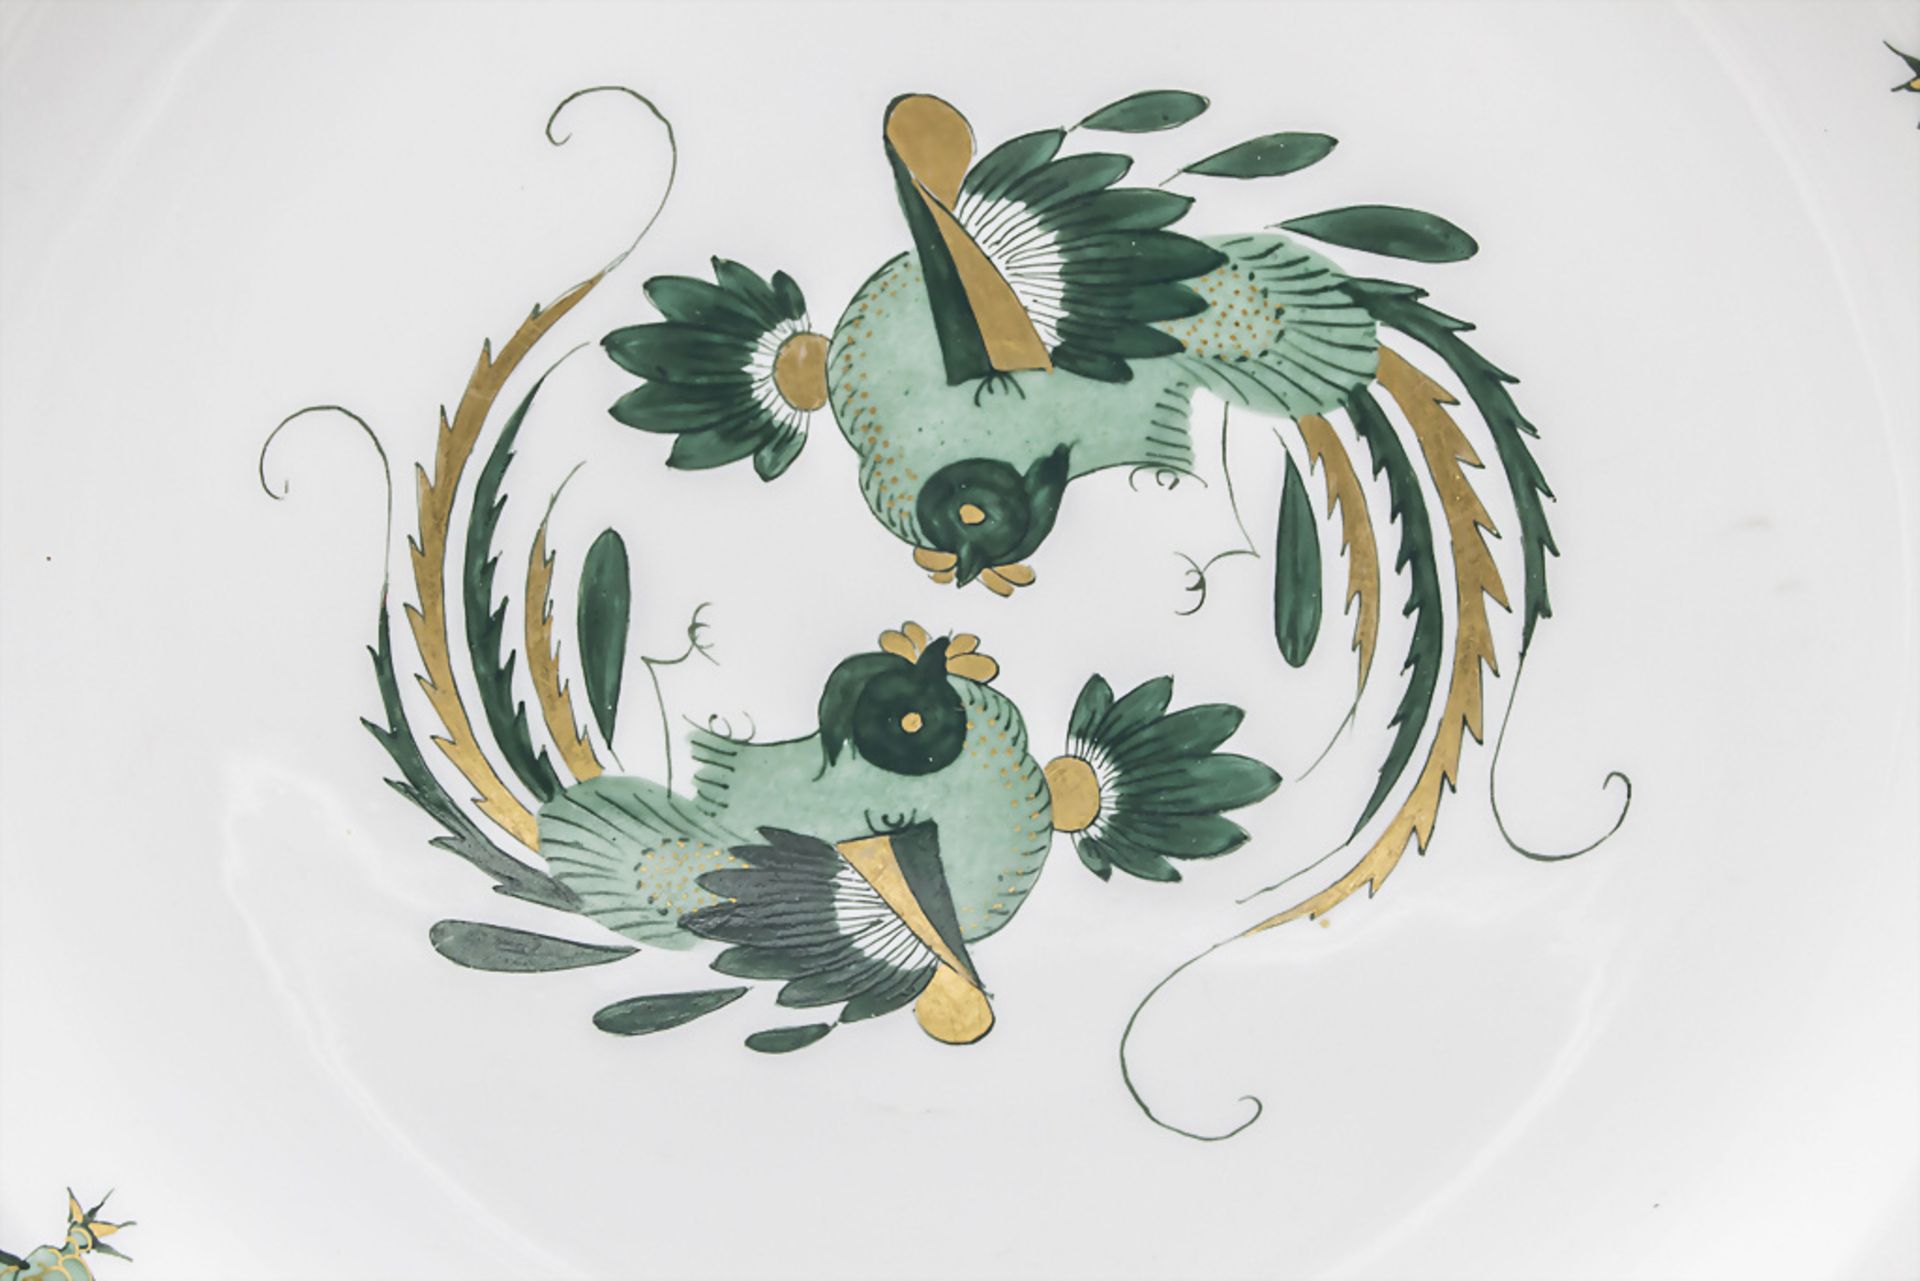 Speiseteller 'Reicher Drache' / A dinner plate with 'Rich Dragon' decoration, Meissen, Ende 19. Jh. - Image 2 of 3